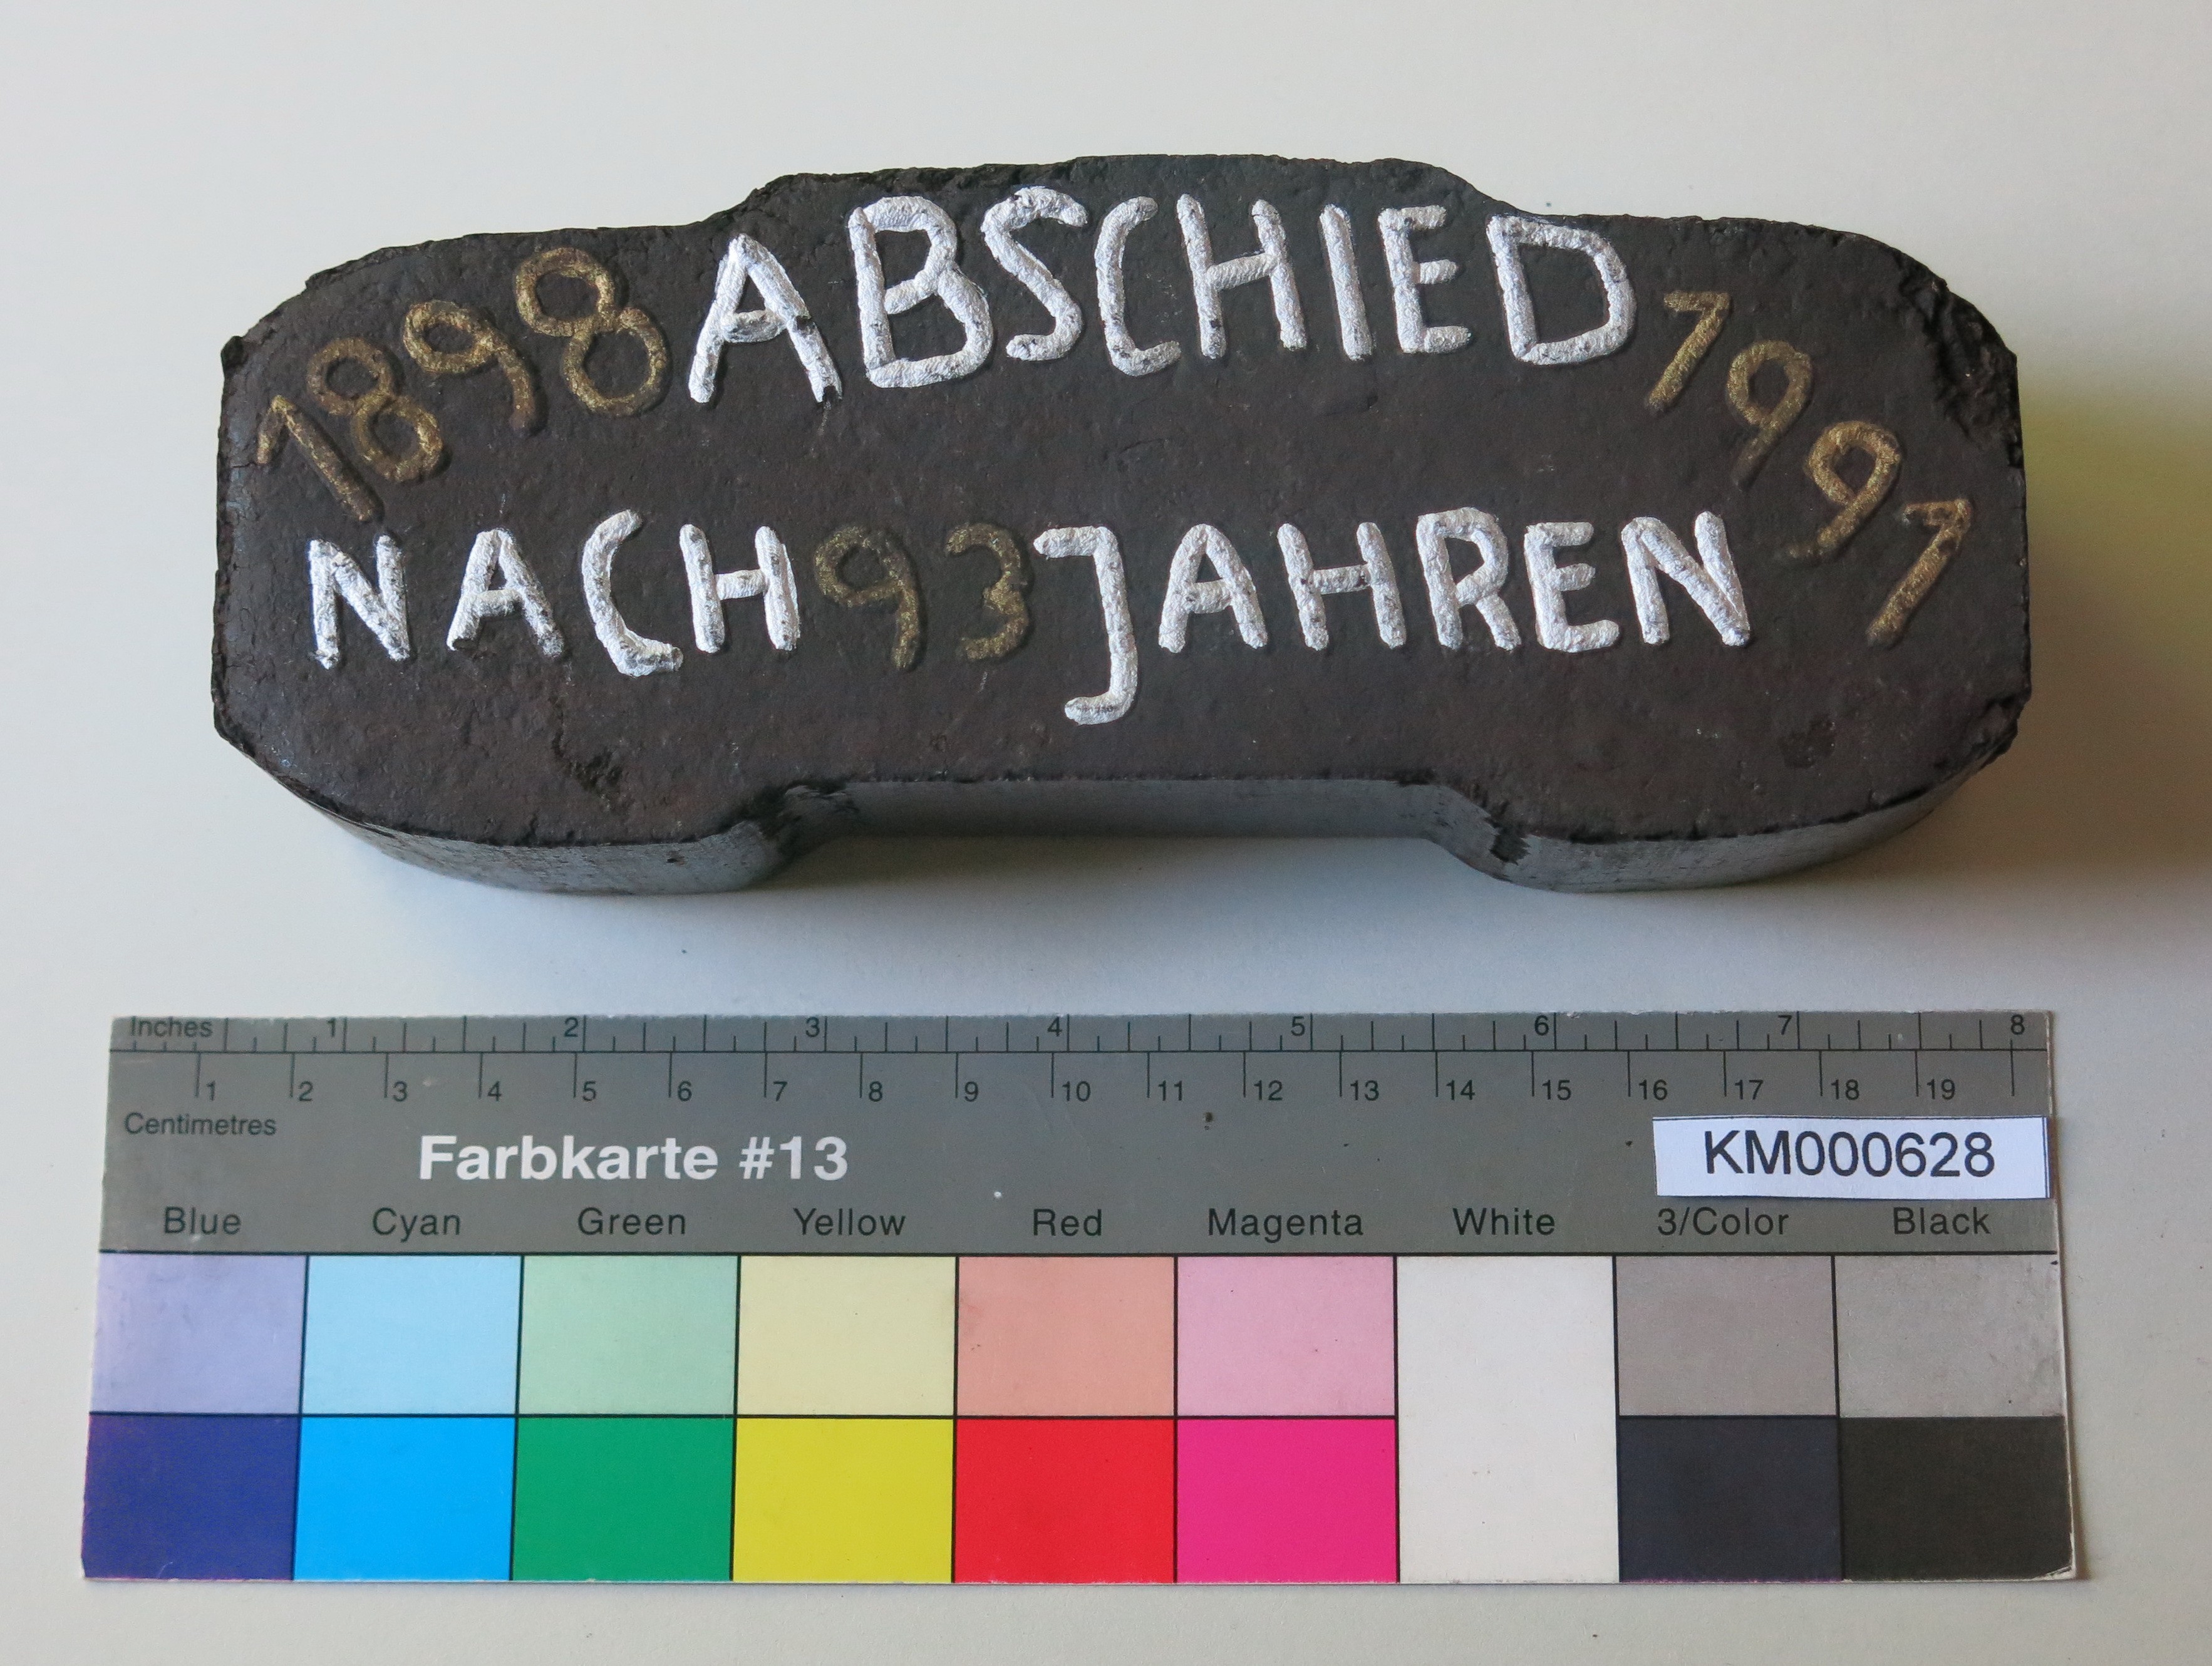 Zierbrikett "1898 1991 ABSCHIED NACH 93 JAHREN" (Energiefabrik Knappenrode CC BY-SA)